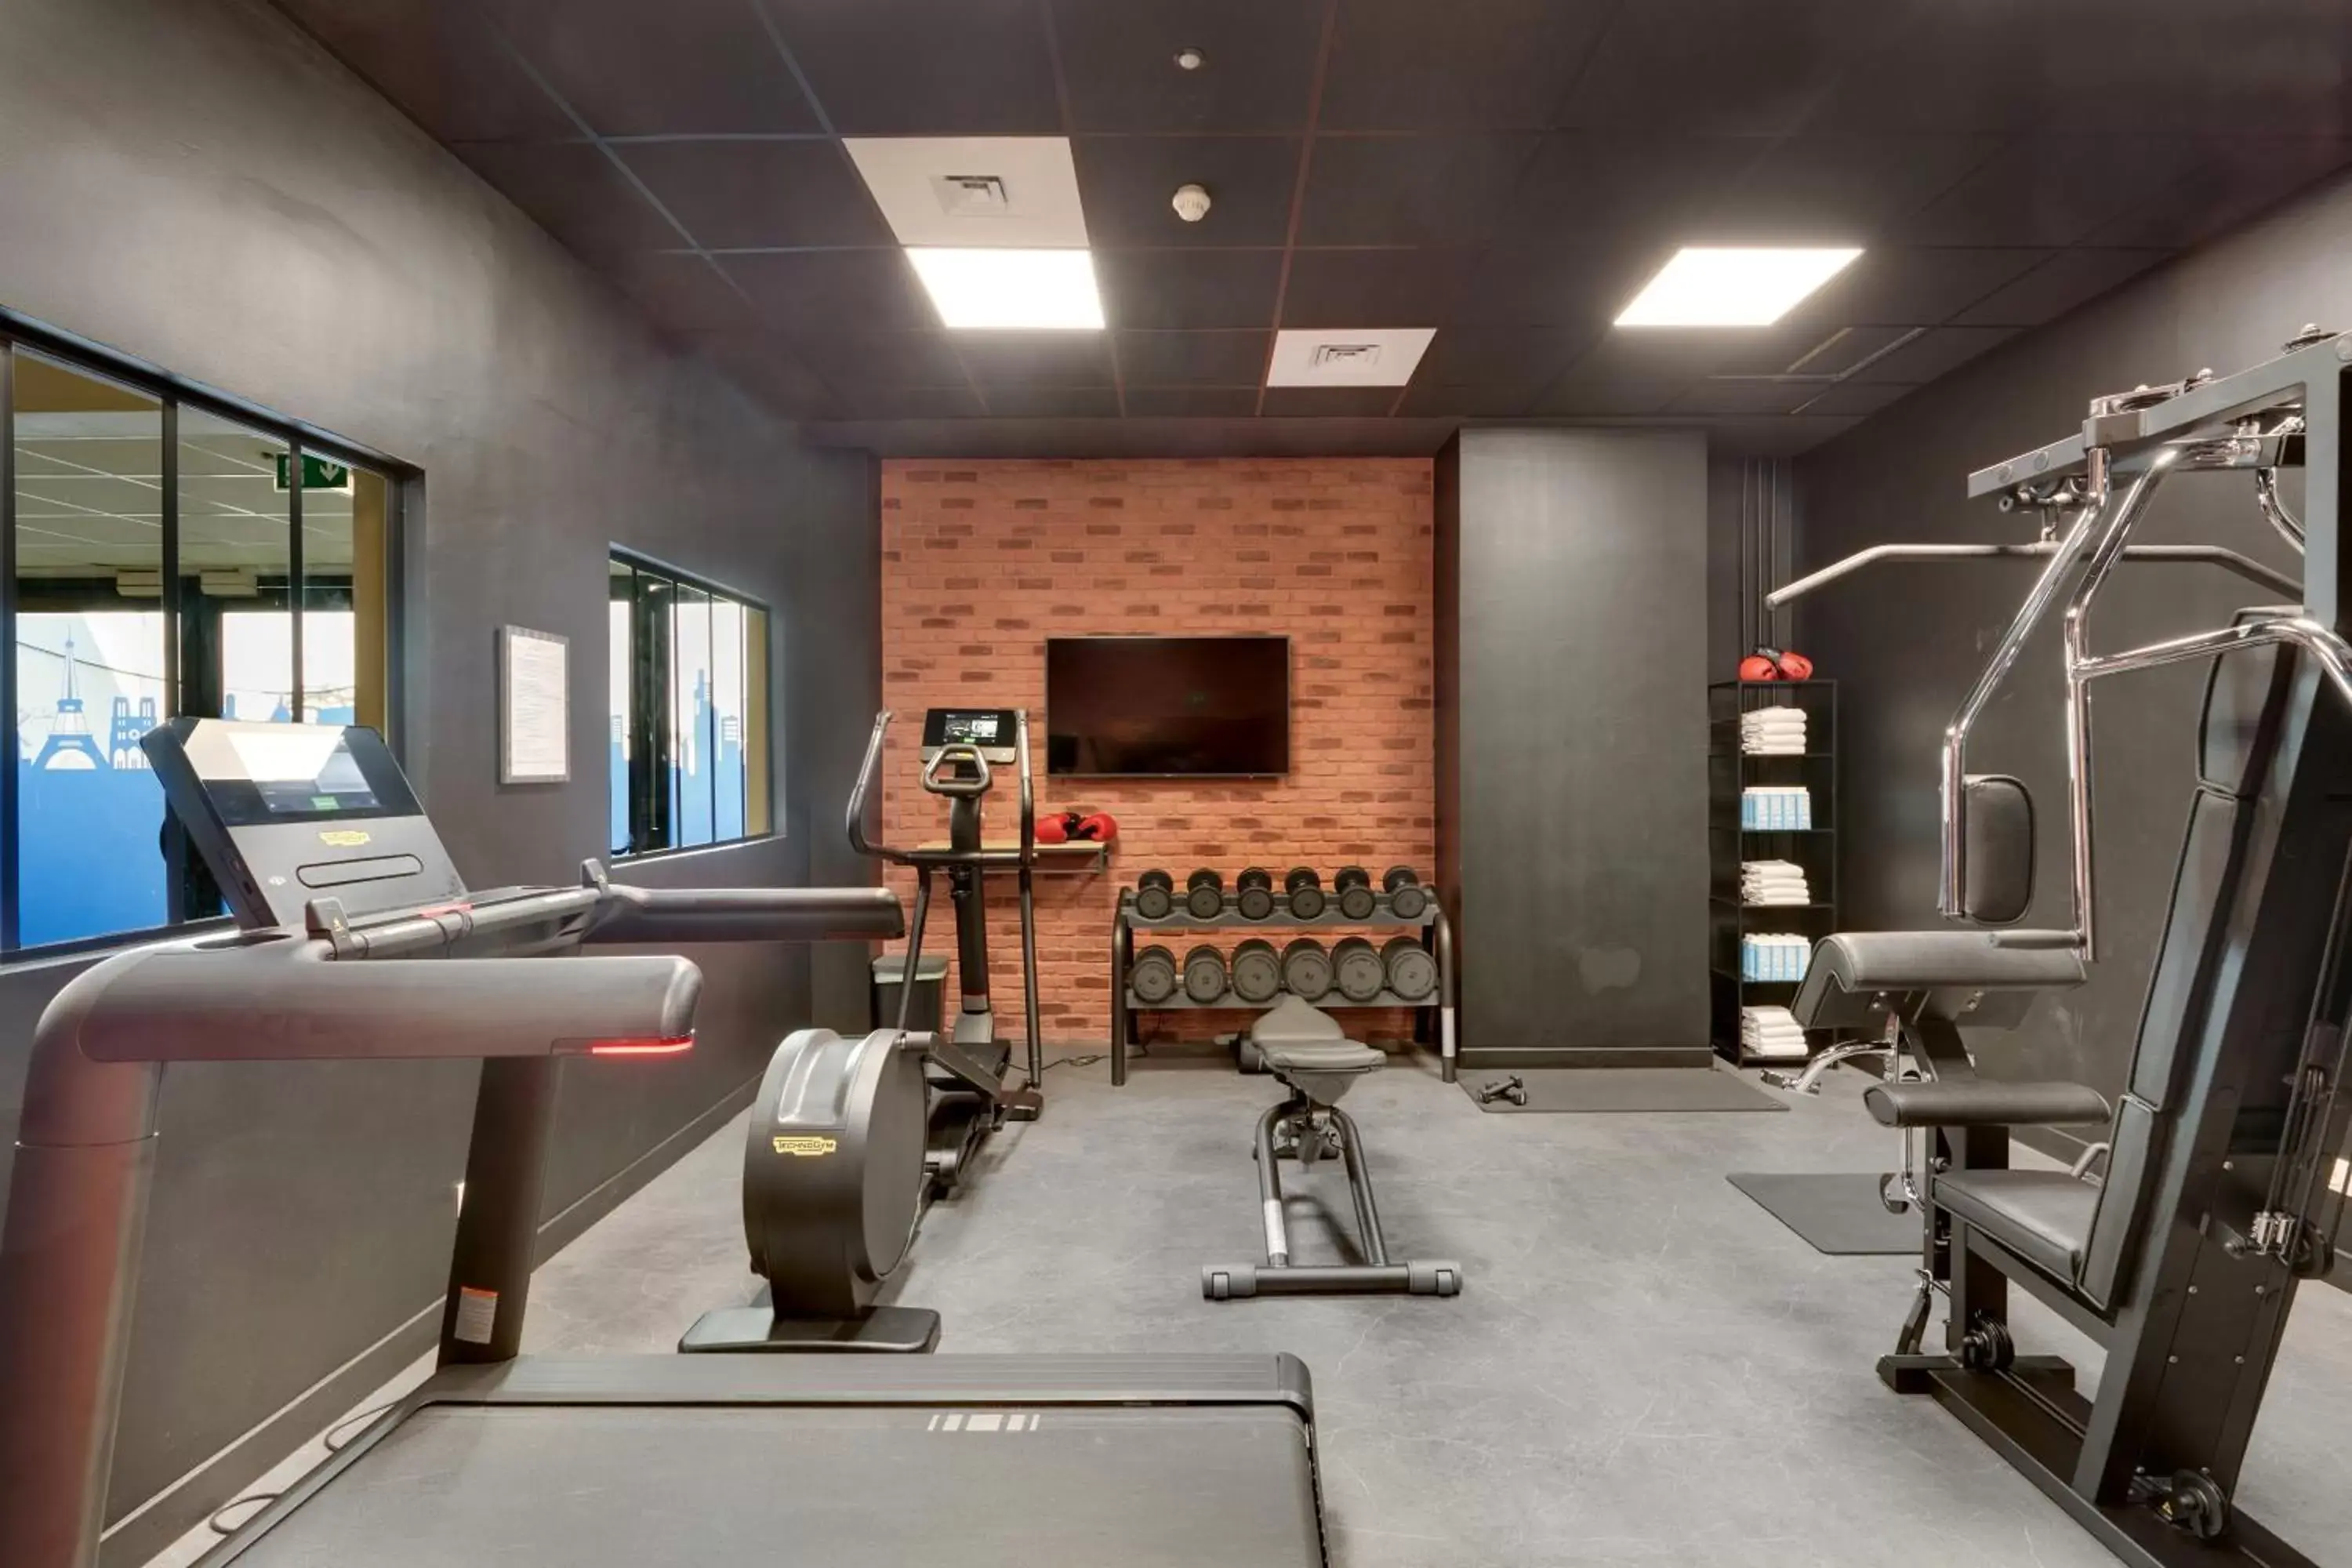 Fitness centre/facilities, Fitness Center/Facilities in Novotel Paris Est